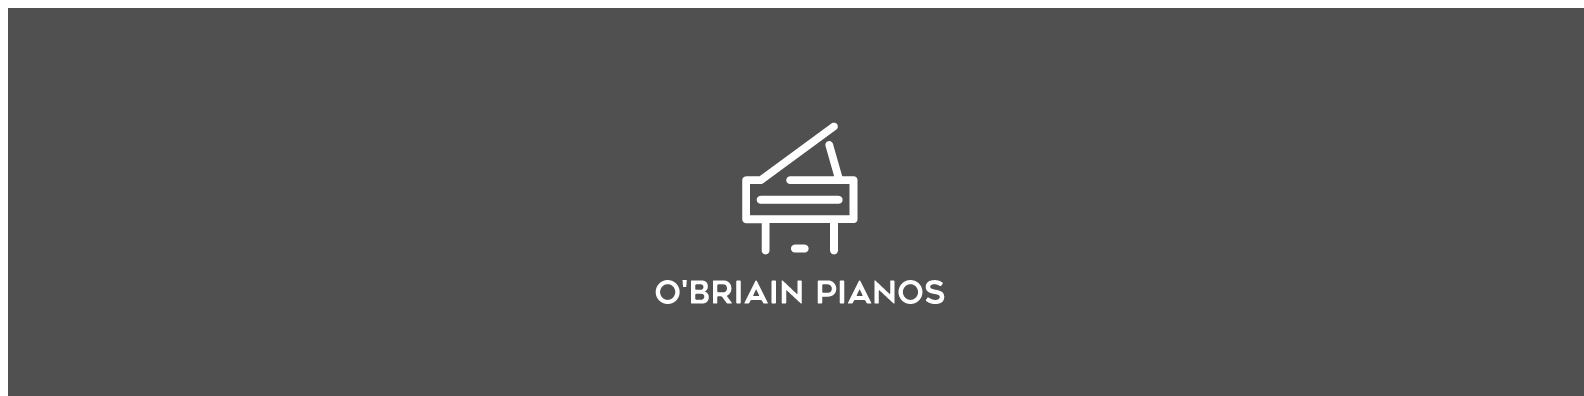 O'Briain Pianos - Yamaha Upright Pianos | Kawai - Hailun - Steinway - Bechstein - Bluthner-O'Briain Pianos